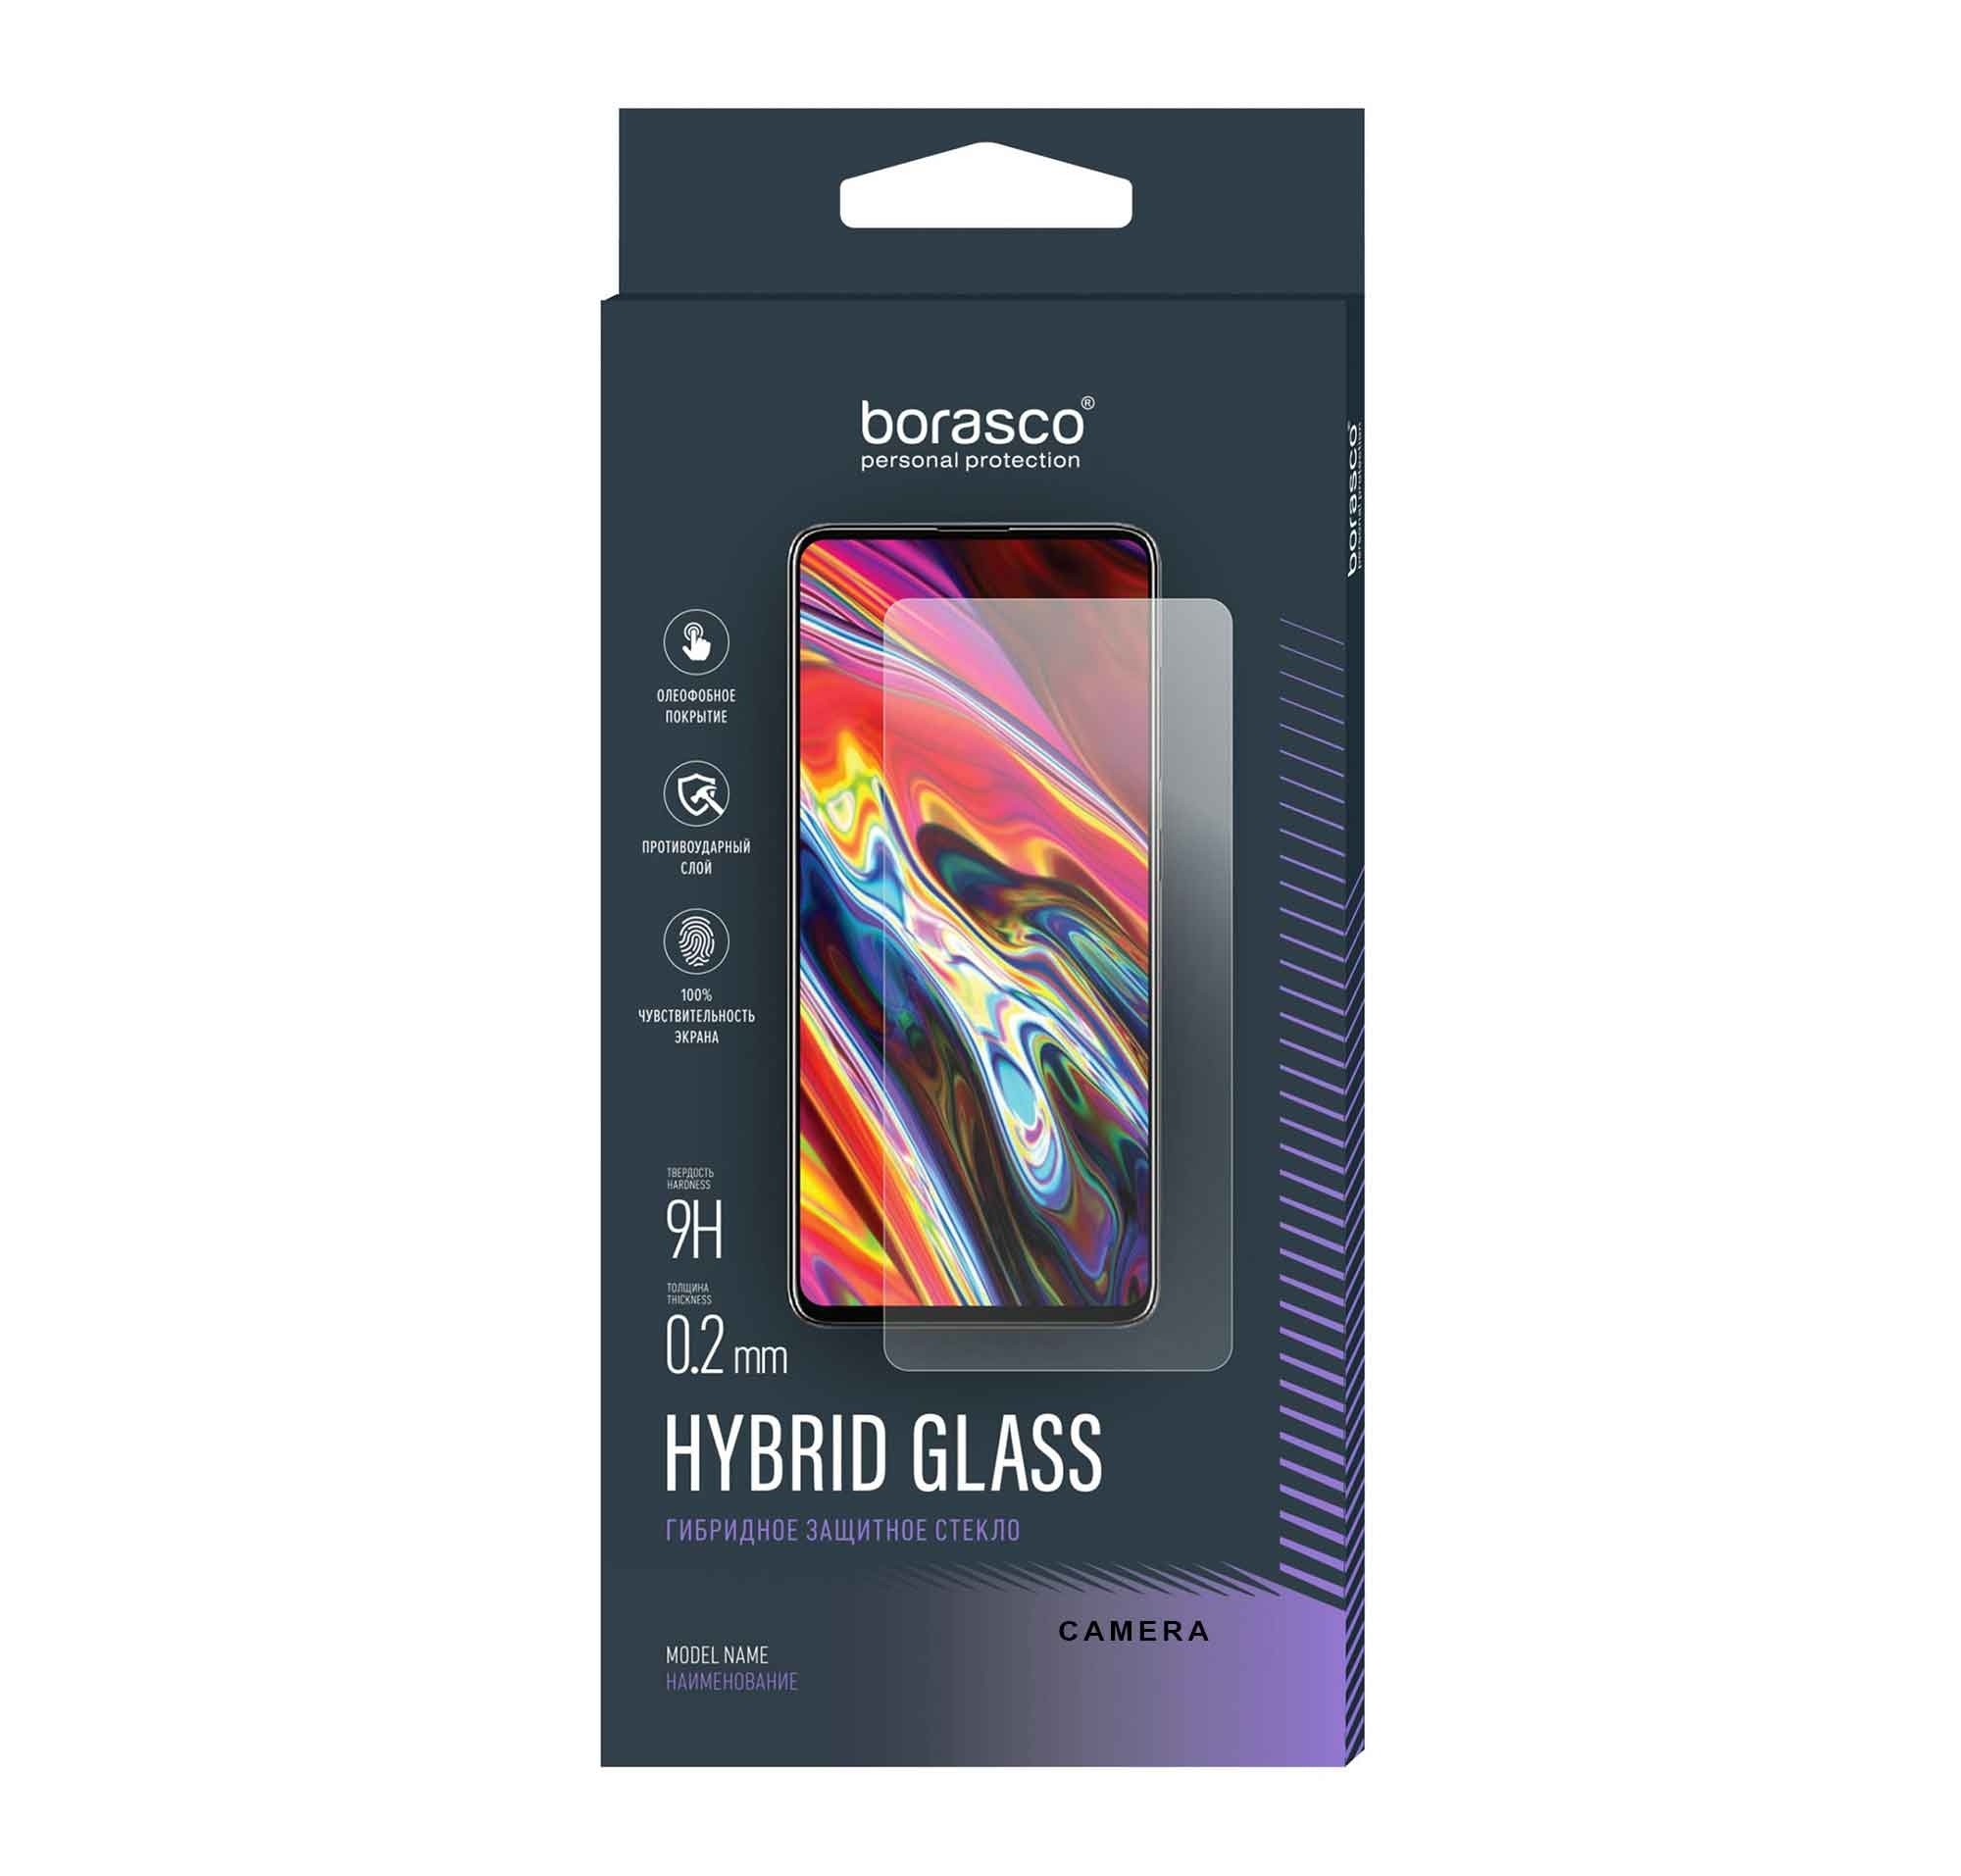 Стекло защитное BoraSCO (Экран+Камера) Hybrid Glass для Oukitel F150 R2022 чехол mypads влюбленные барашки для oukitel f150 h2022 задняя панель накладка бампер